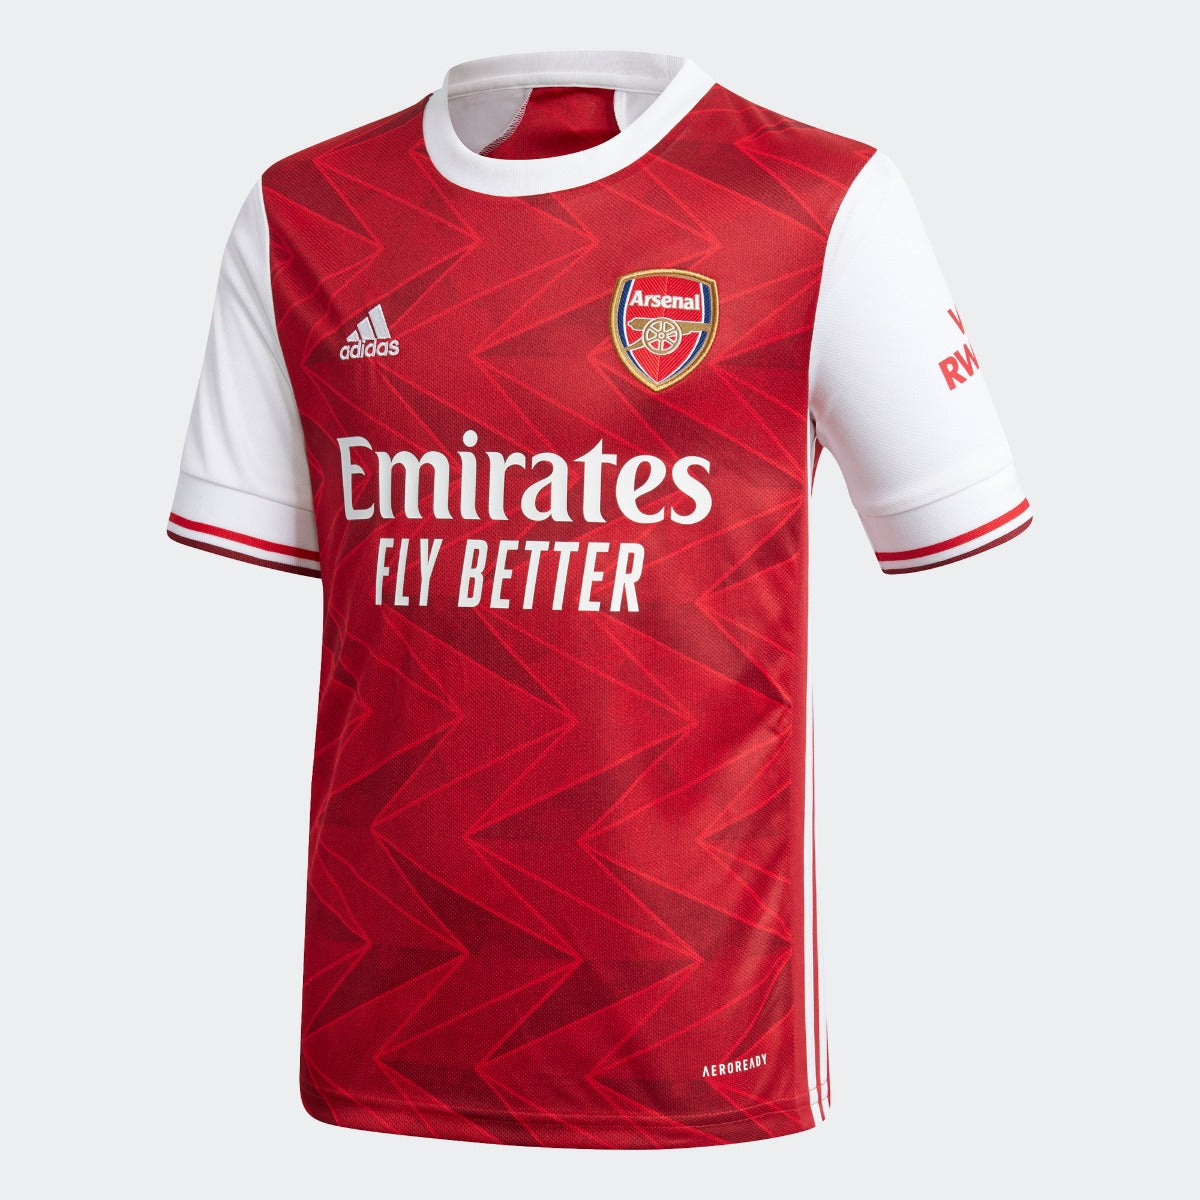 Adidas, Adidas 2020-21 Arsenal Maglia Home YOUTH - Rosso-Bianco